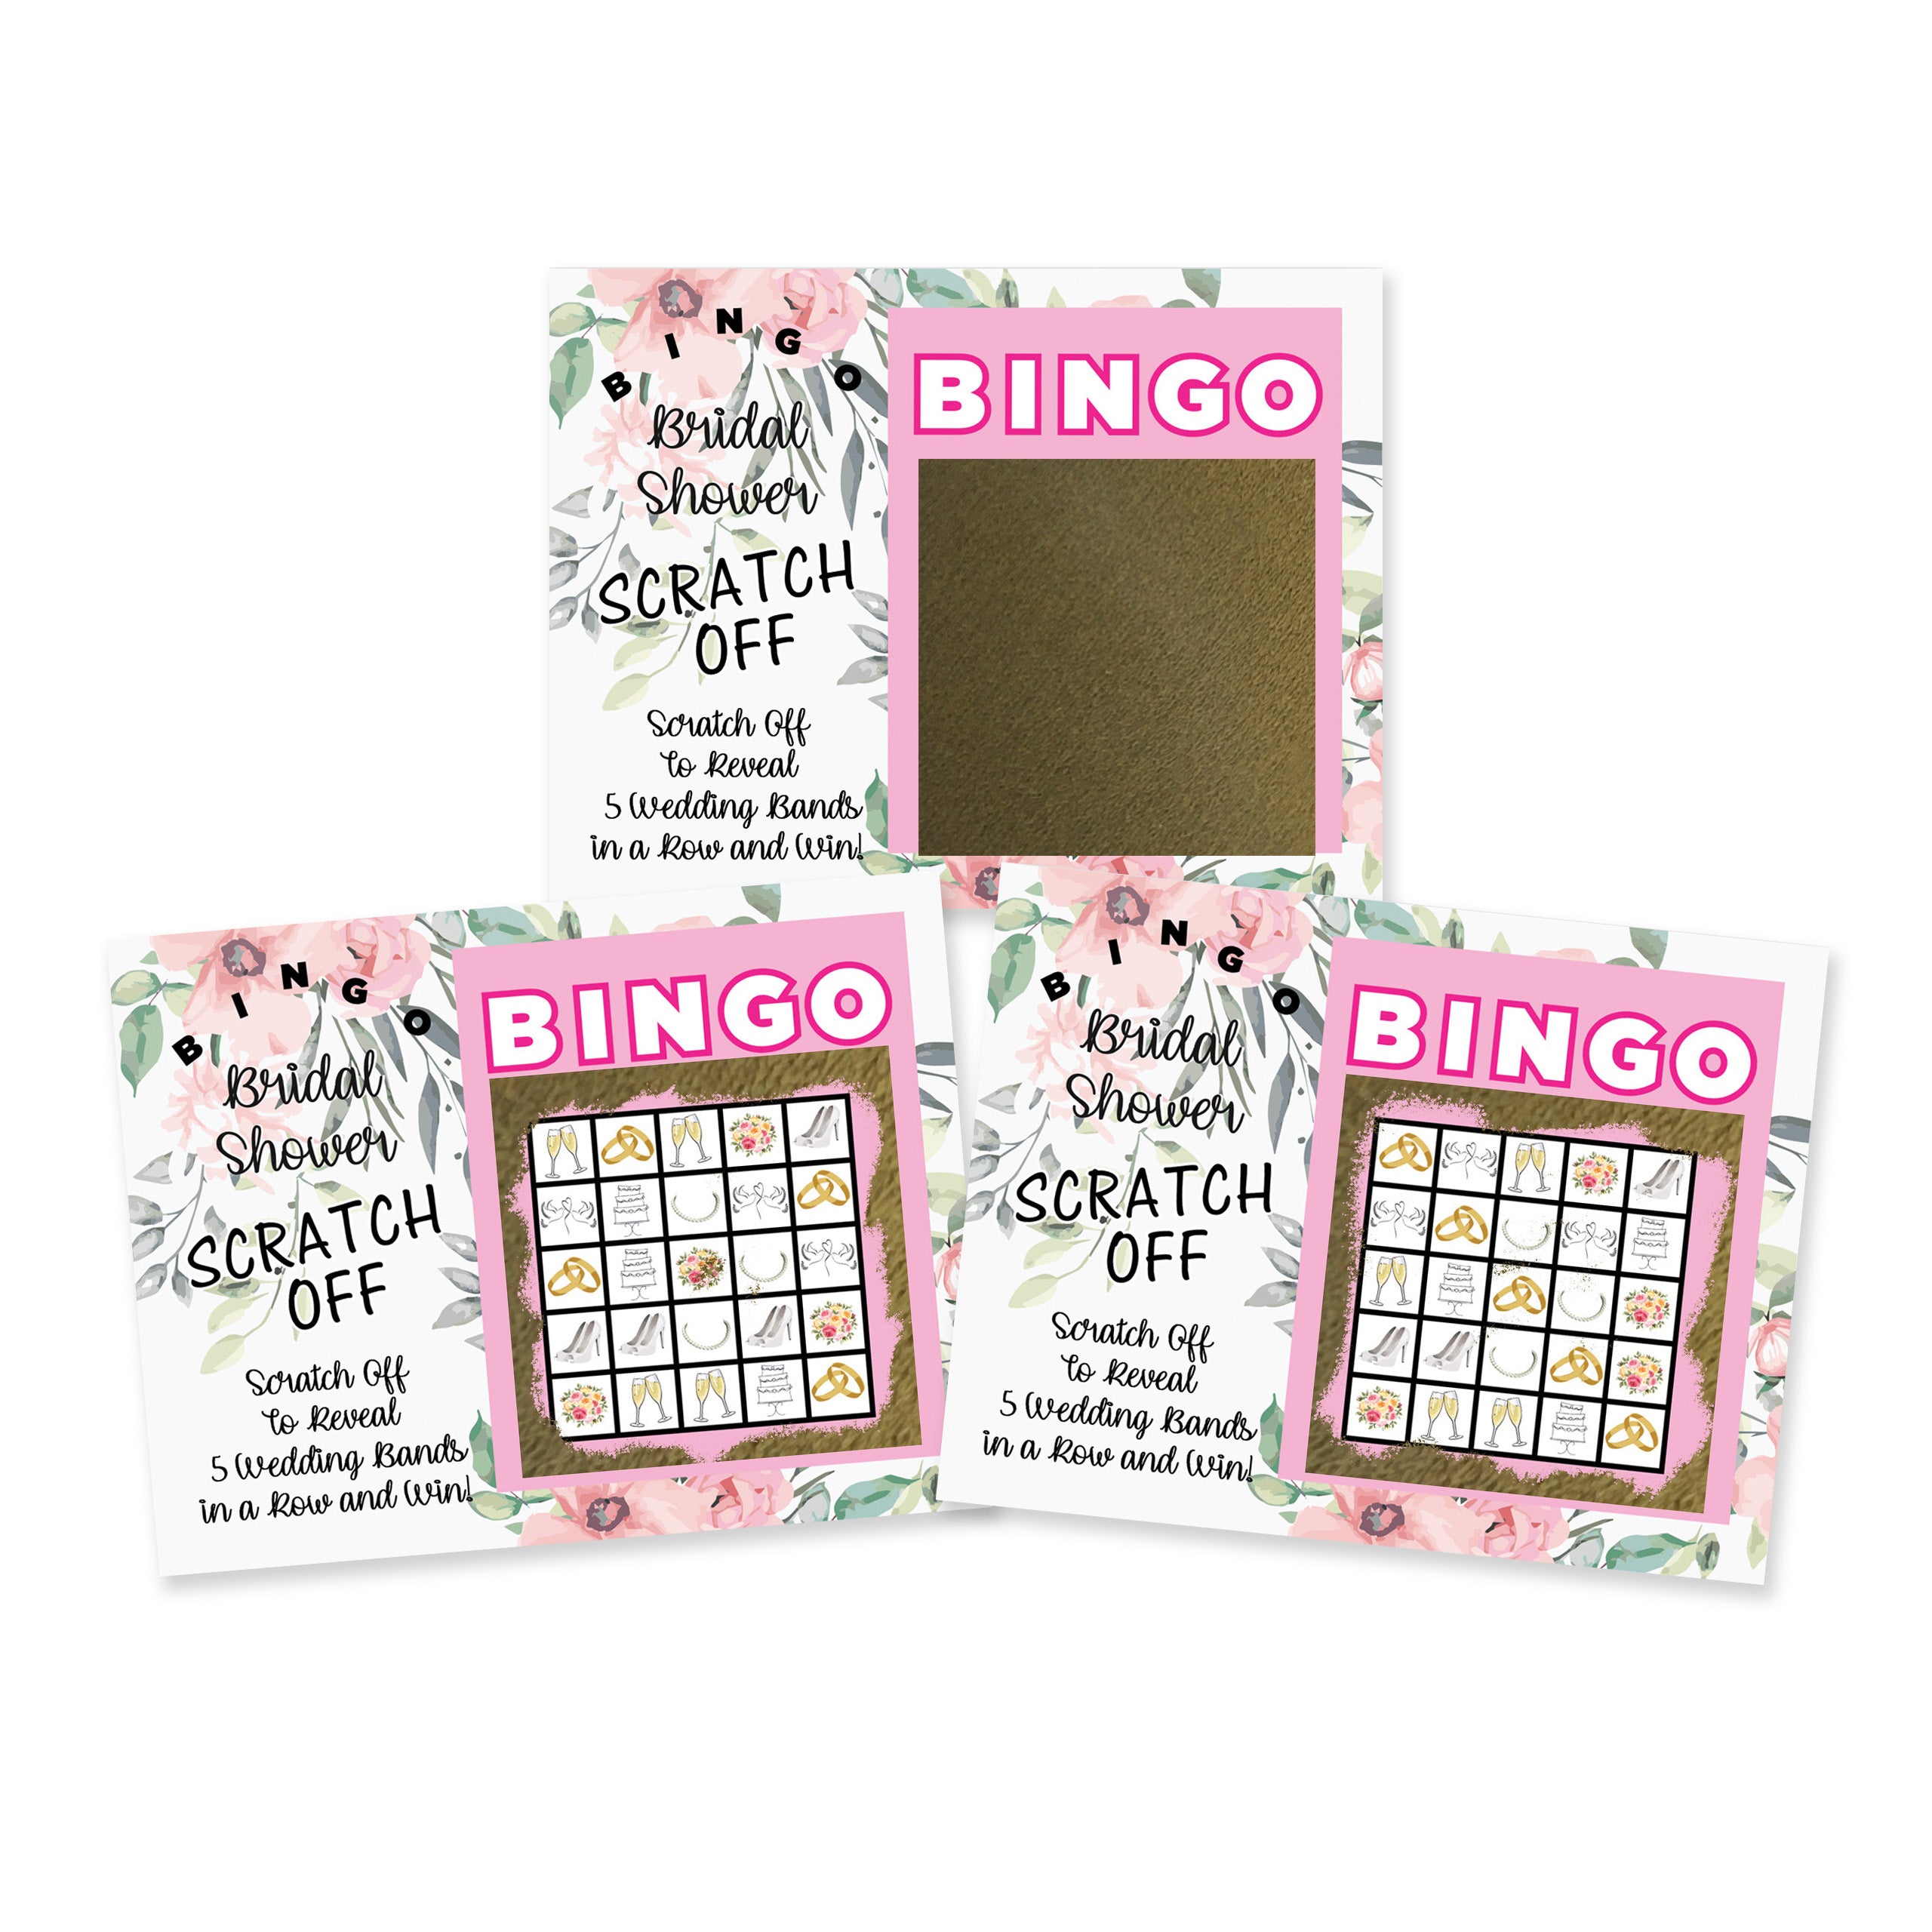 Bridal Shower Flowers BINGO Scratch Off Game Cards 26 Pack - 2 Bingo and 24 Non-Bingo Cards - My Scratch Offs